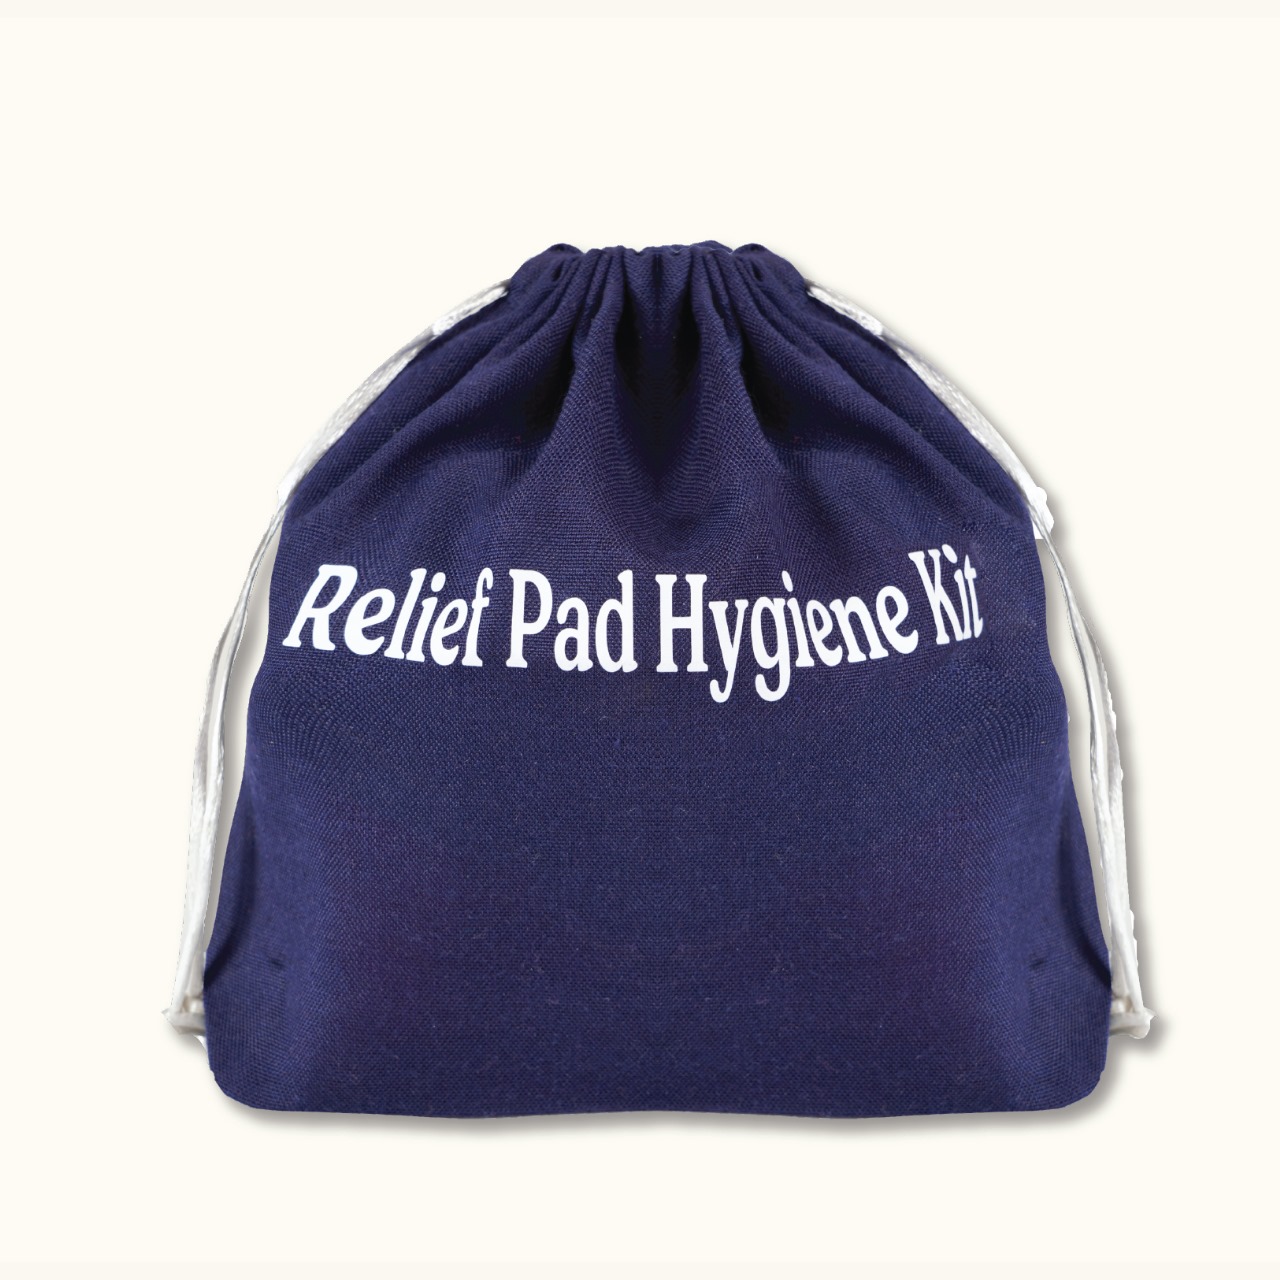 relief-pad-hygiene-kit